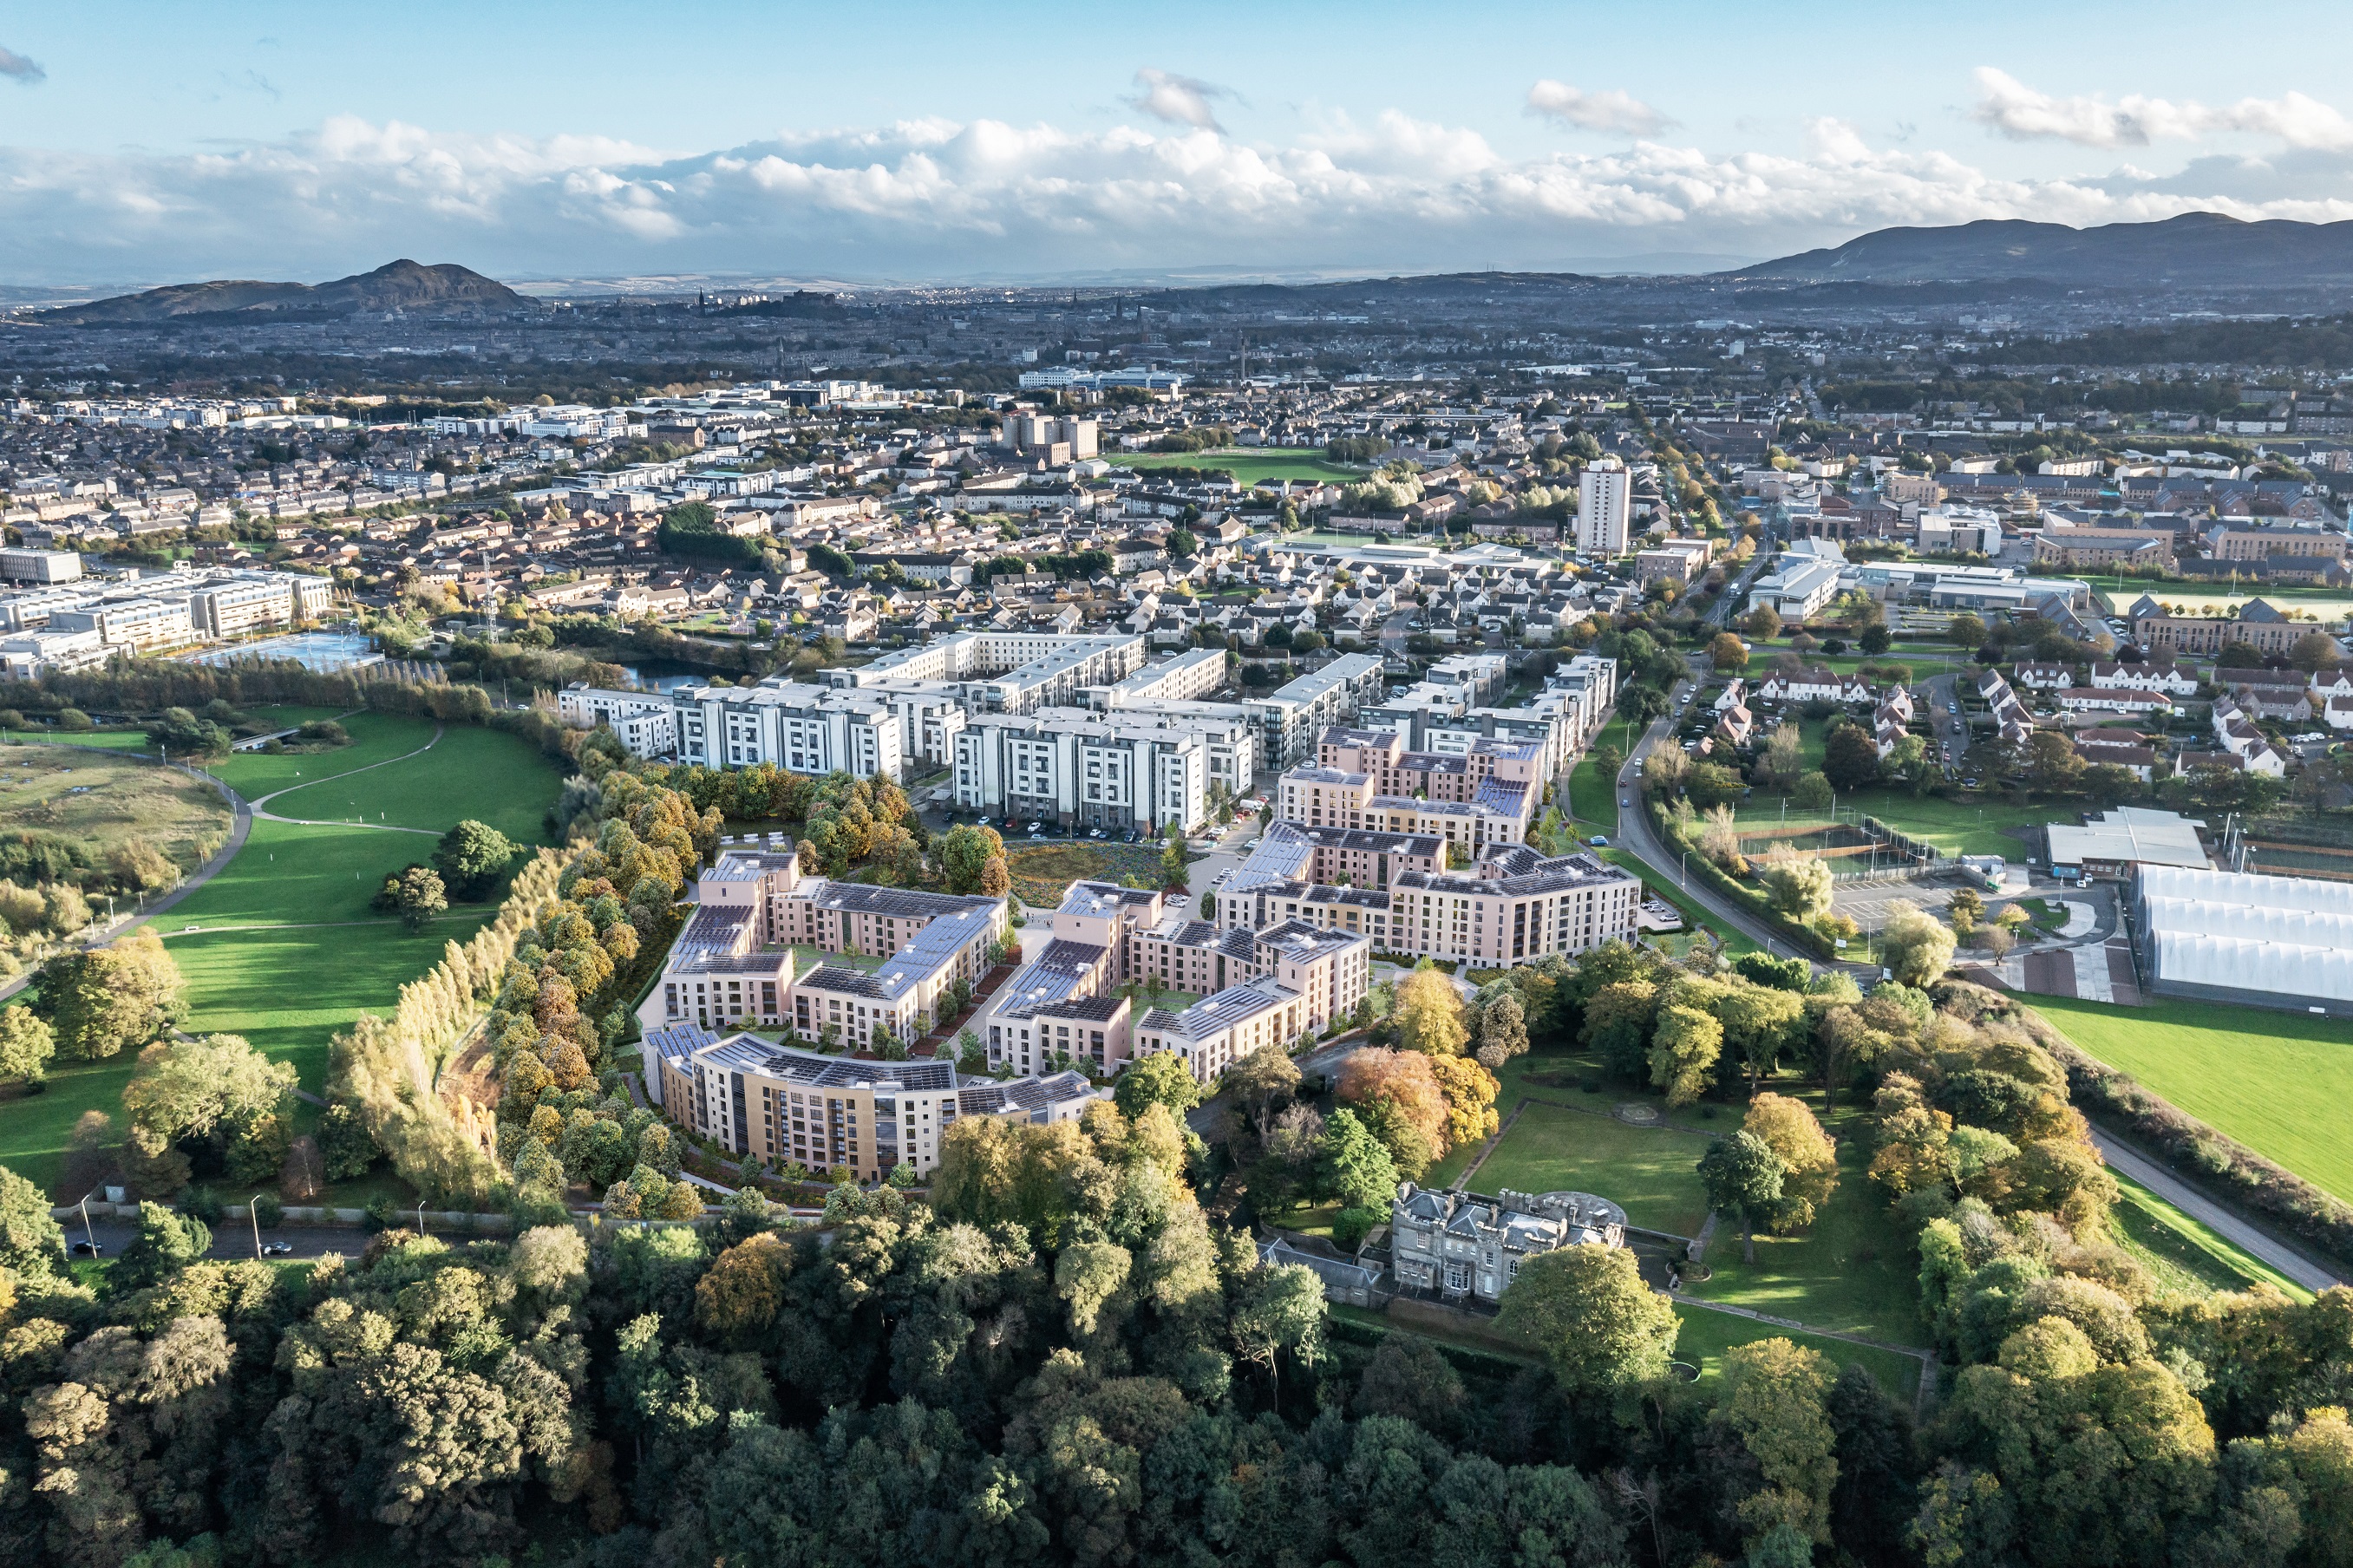 Updated 20-minute neighbourhood vision unveiled for Edinburgh